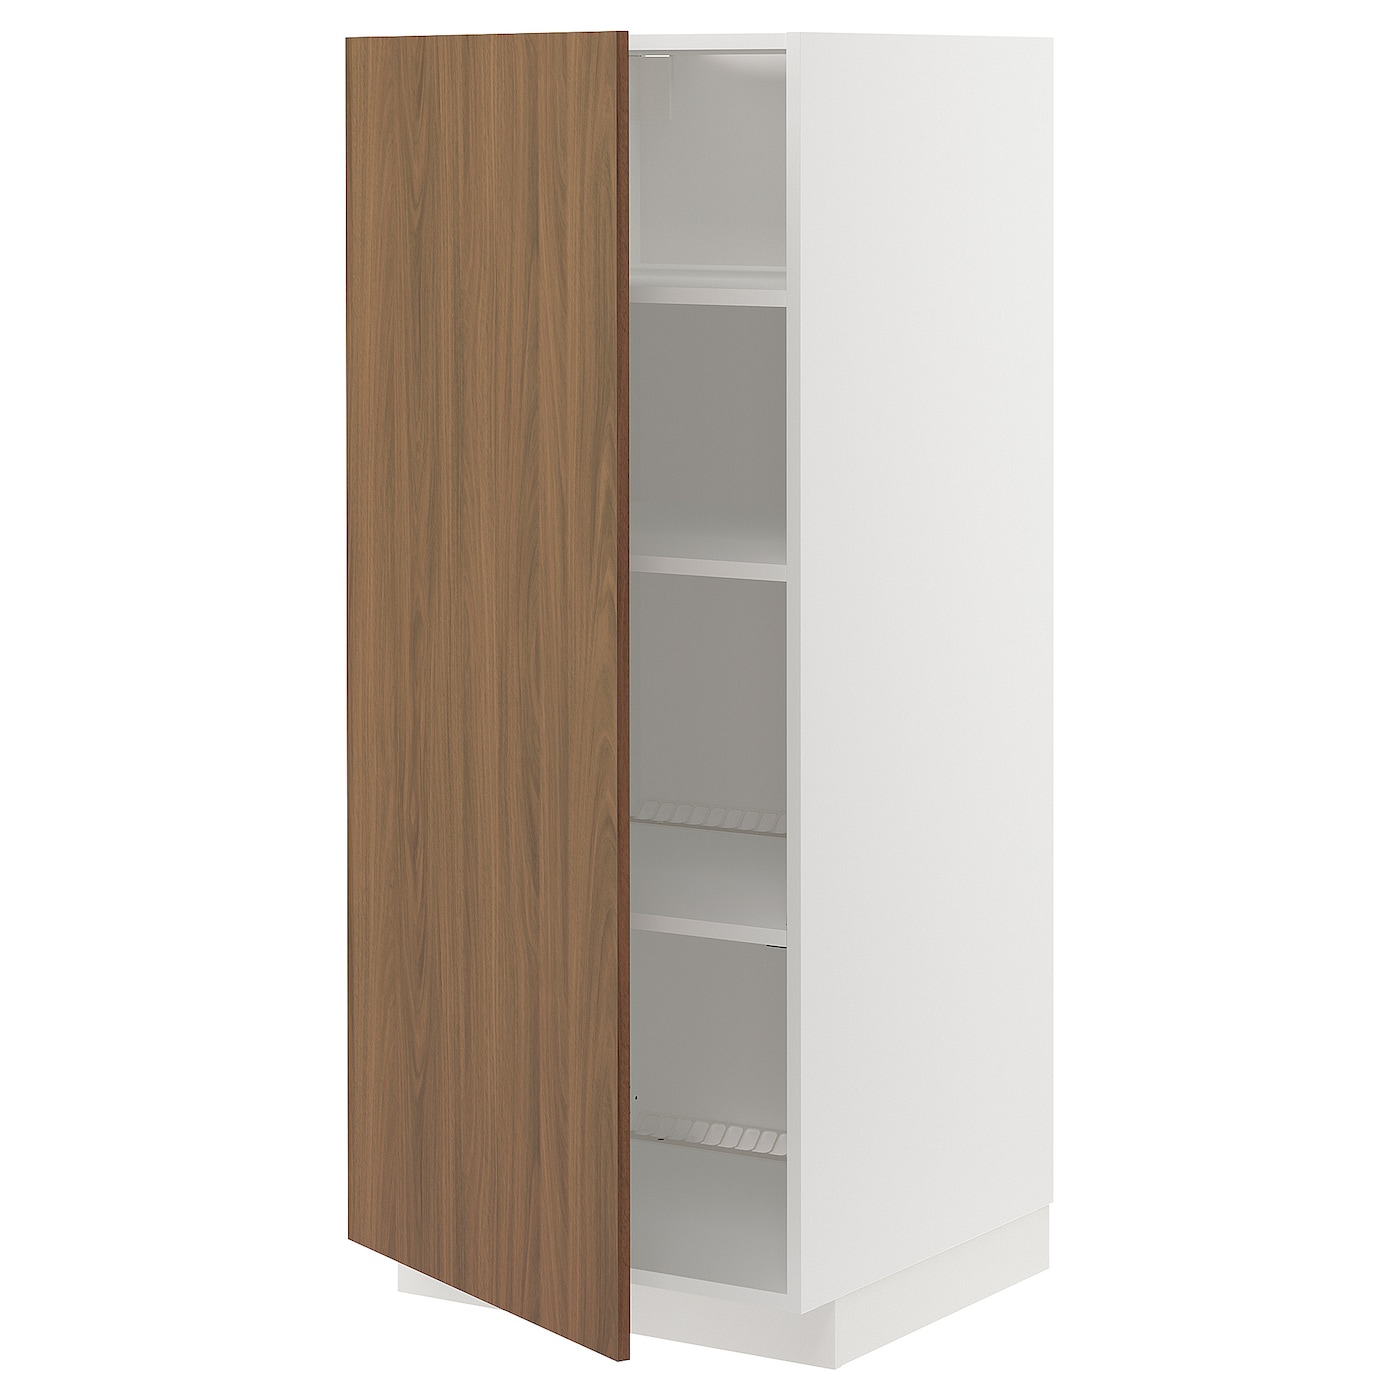 Напольный шкаф - METOD IKEA/ МЕТОД ИКЕА,  140х60хх60  см, белый/коричневый